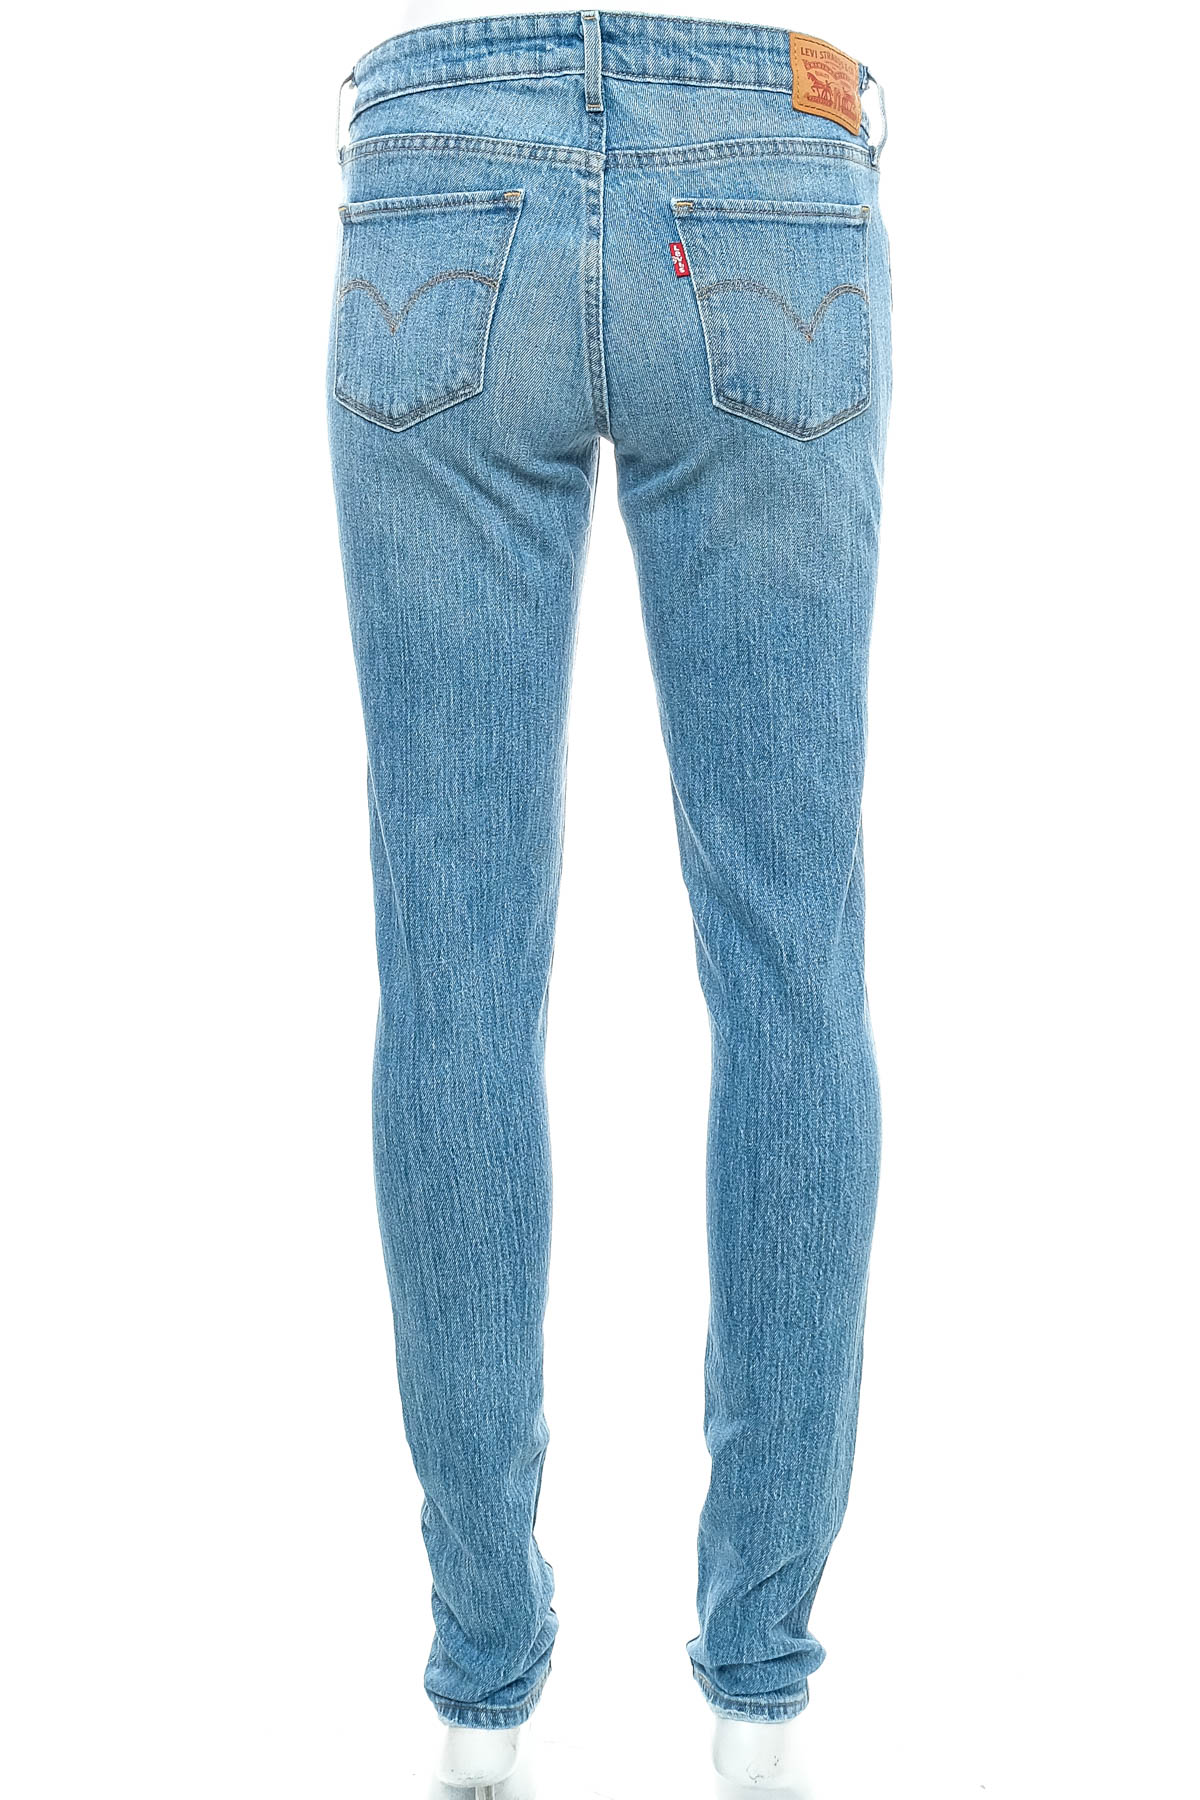 Women's jeans - Levi Strauss & Co. - 1